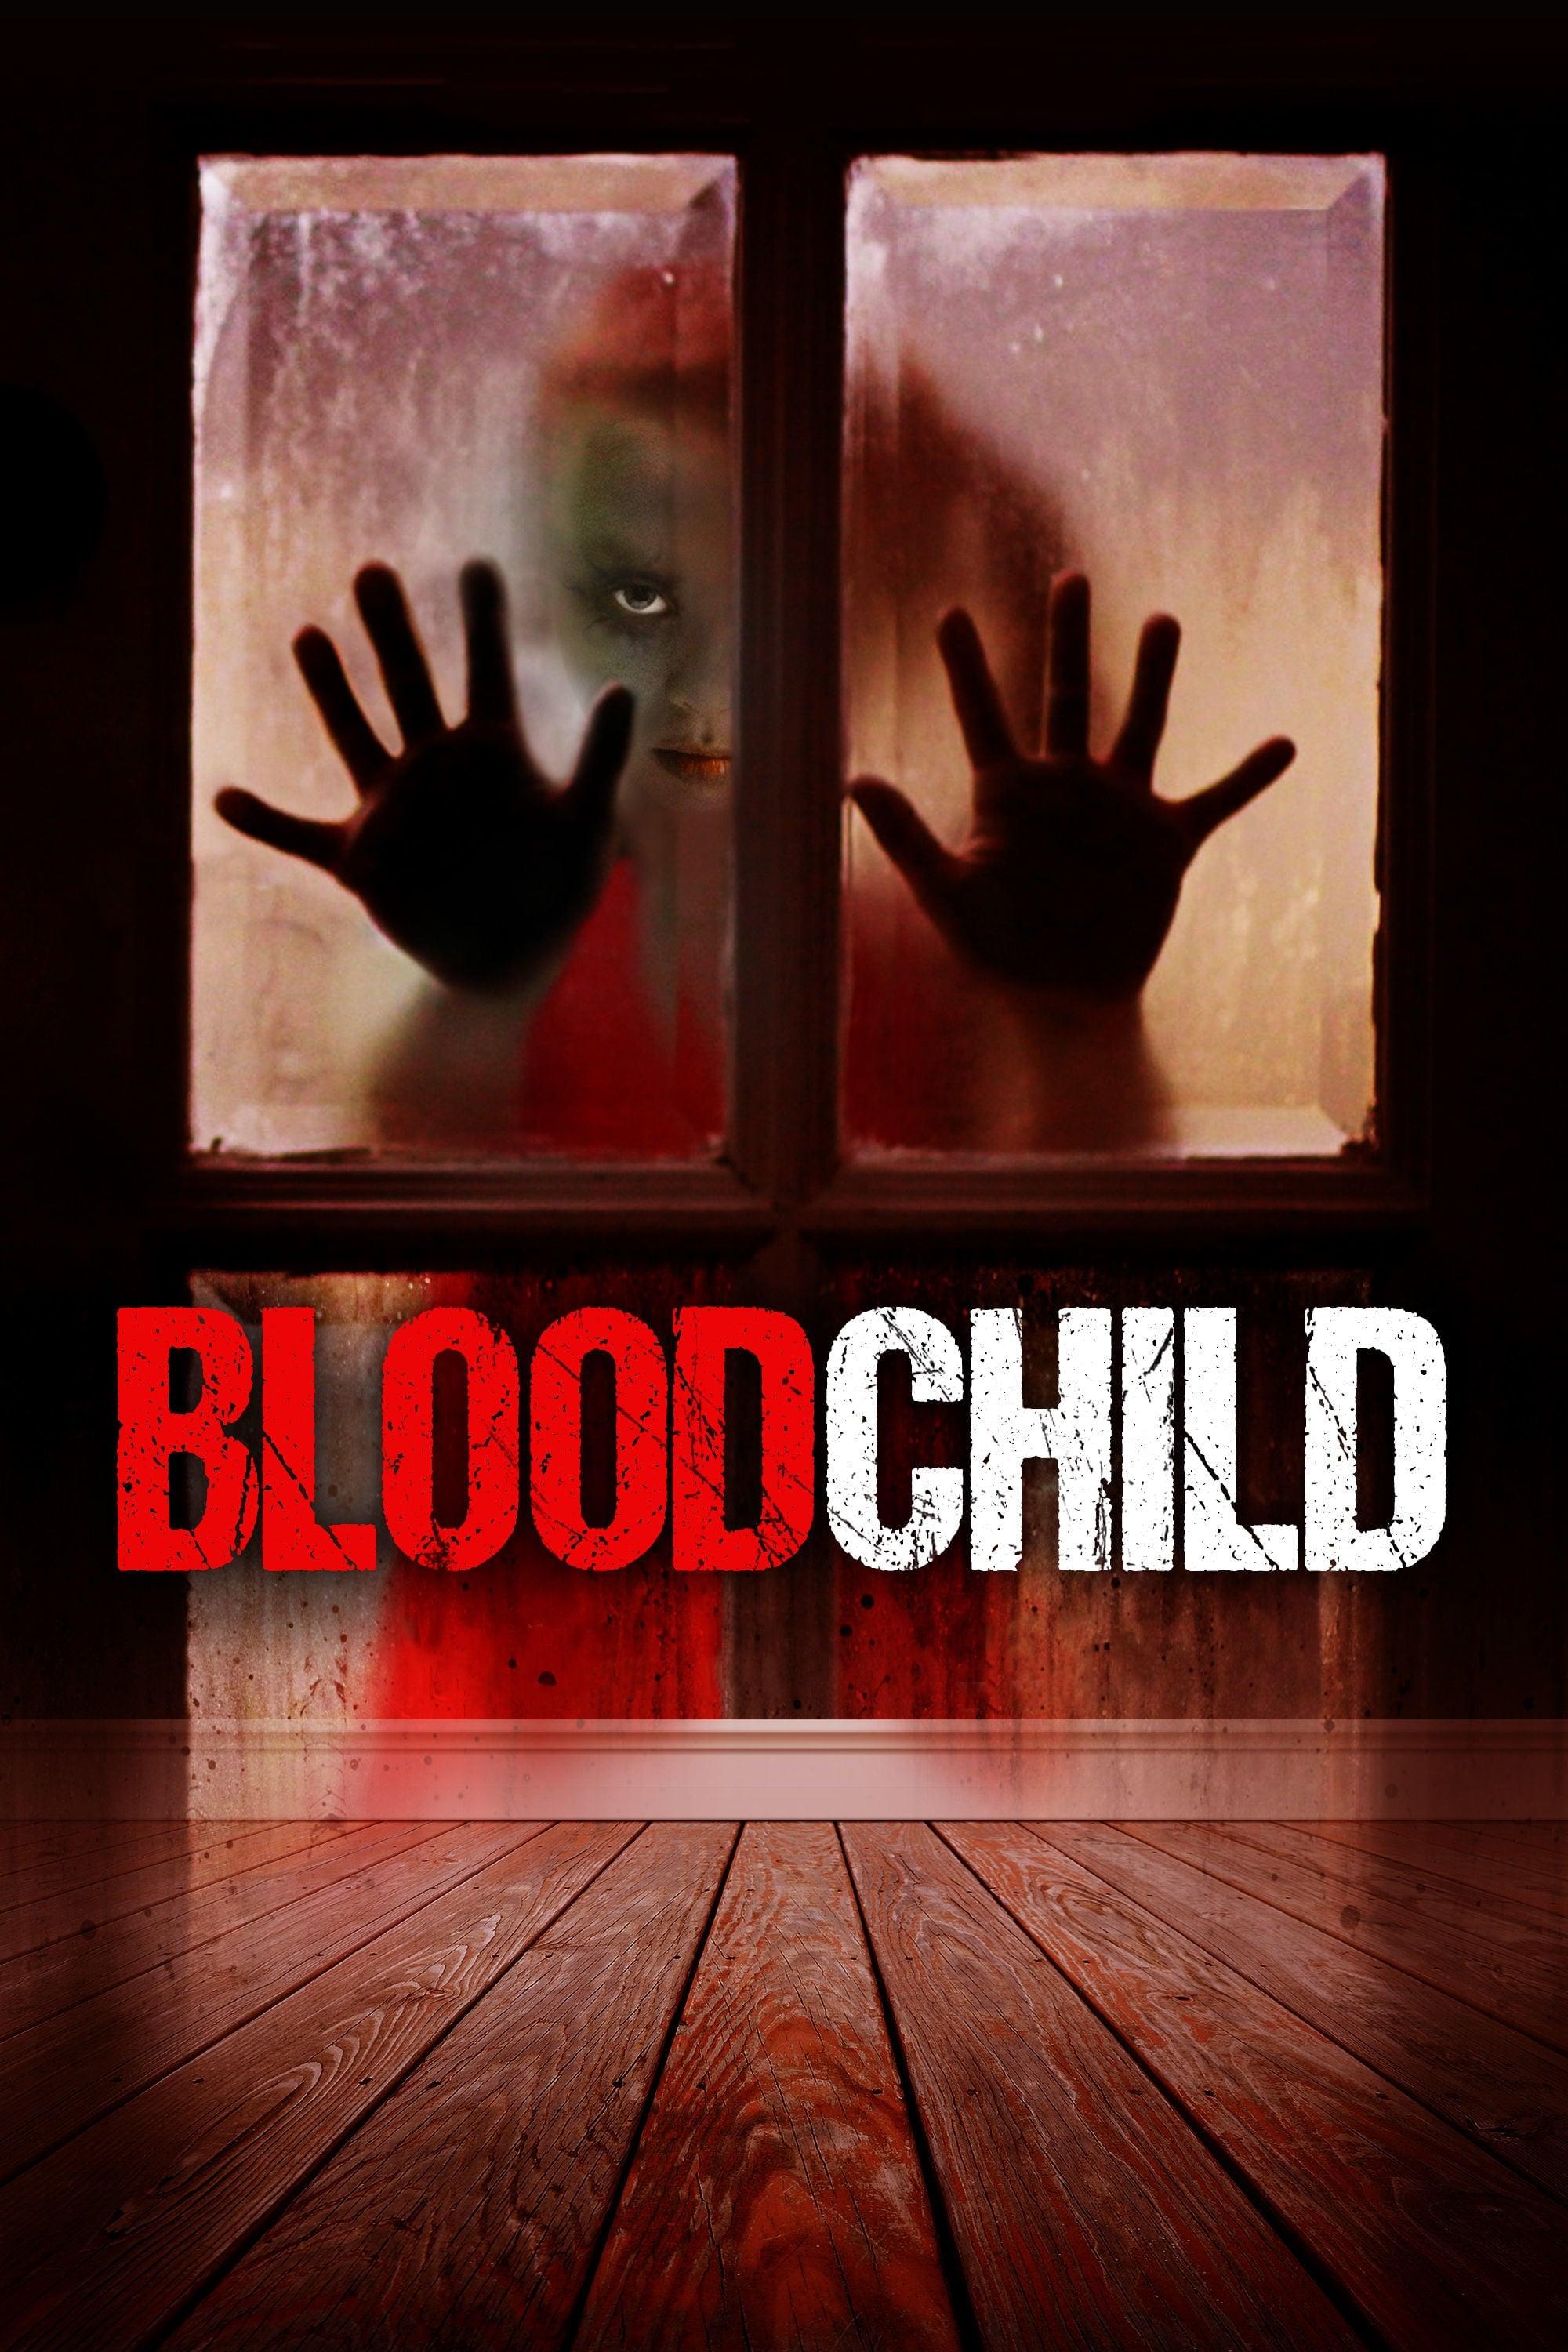 Blood Child poster